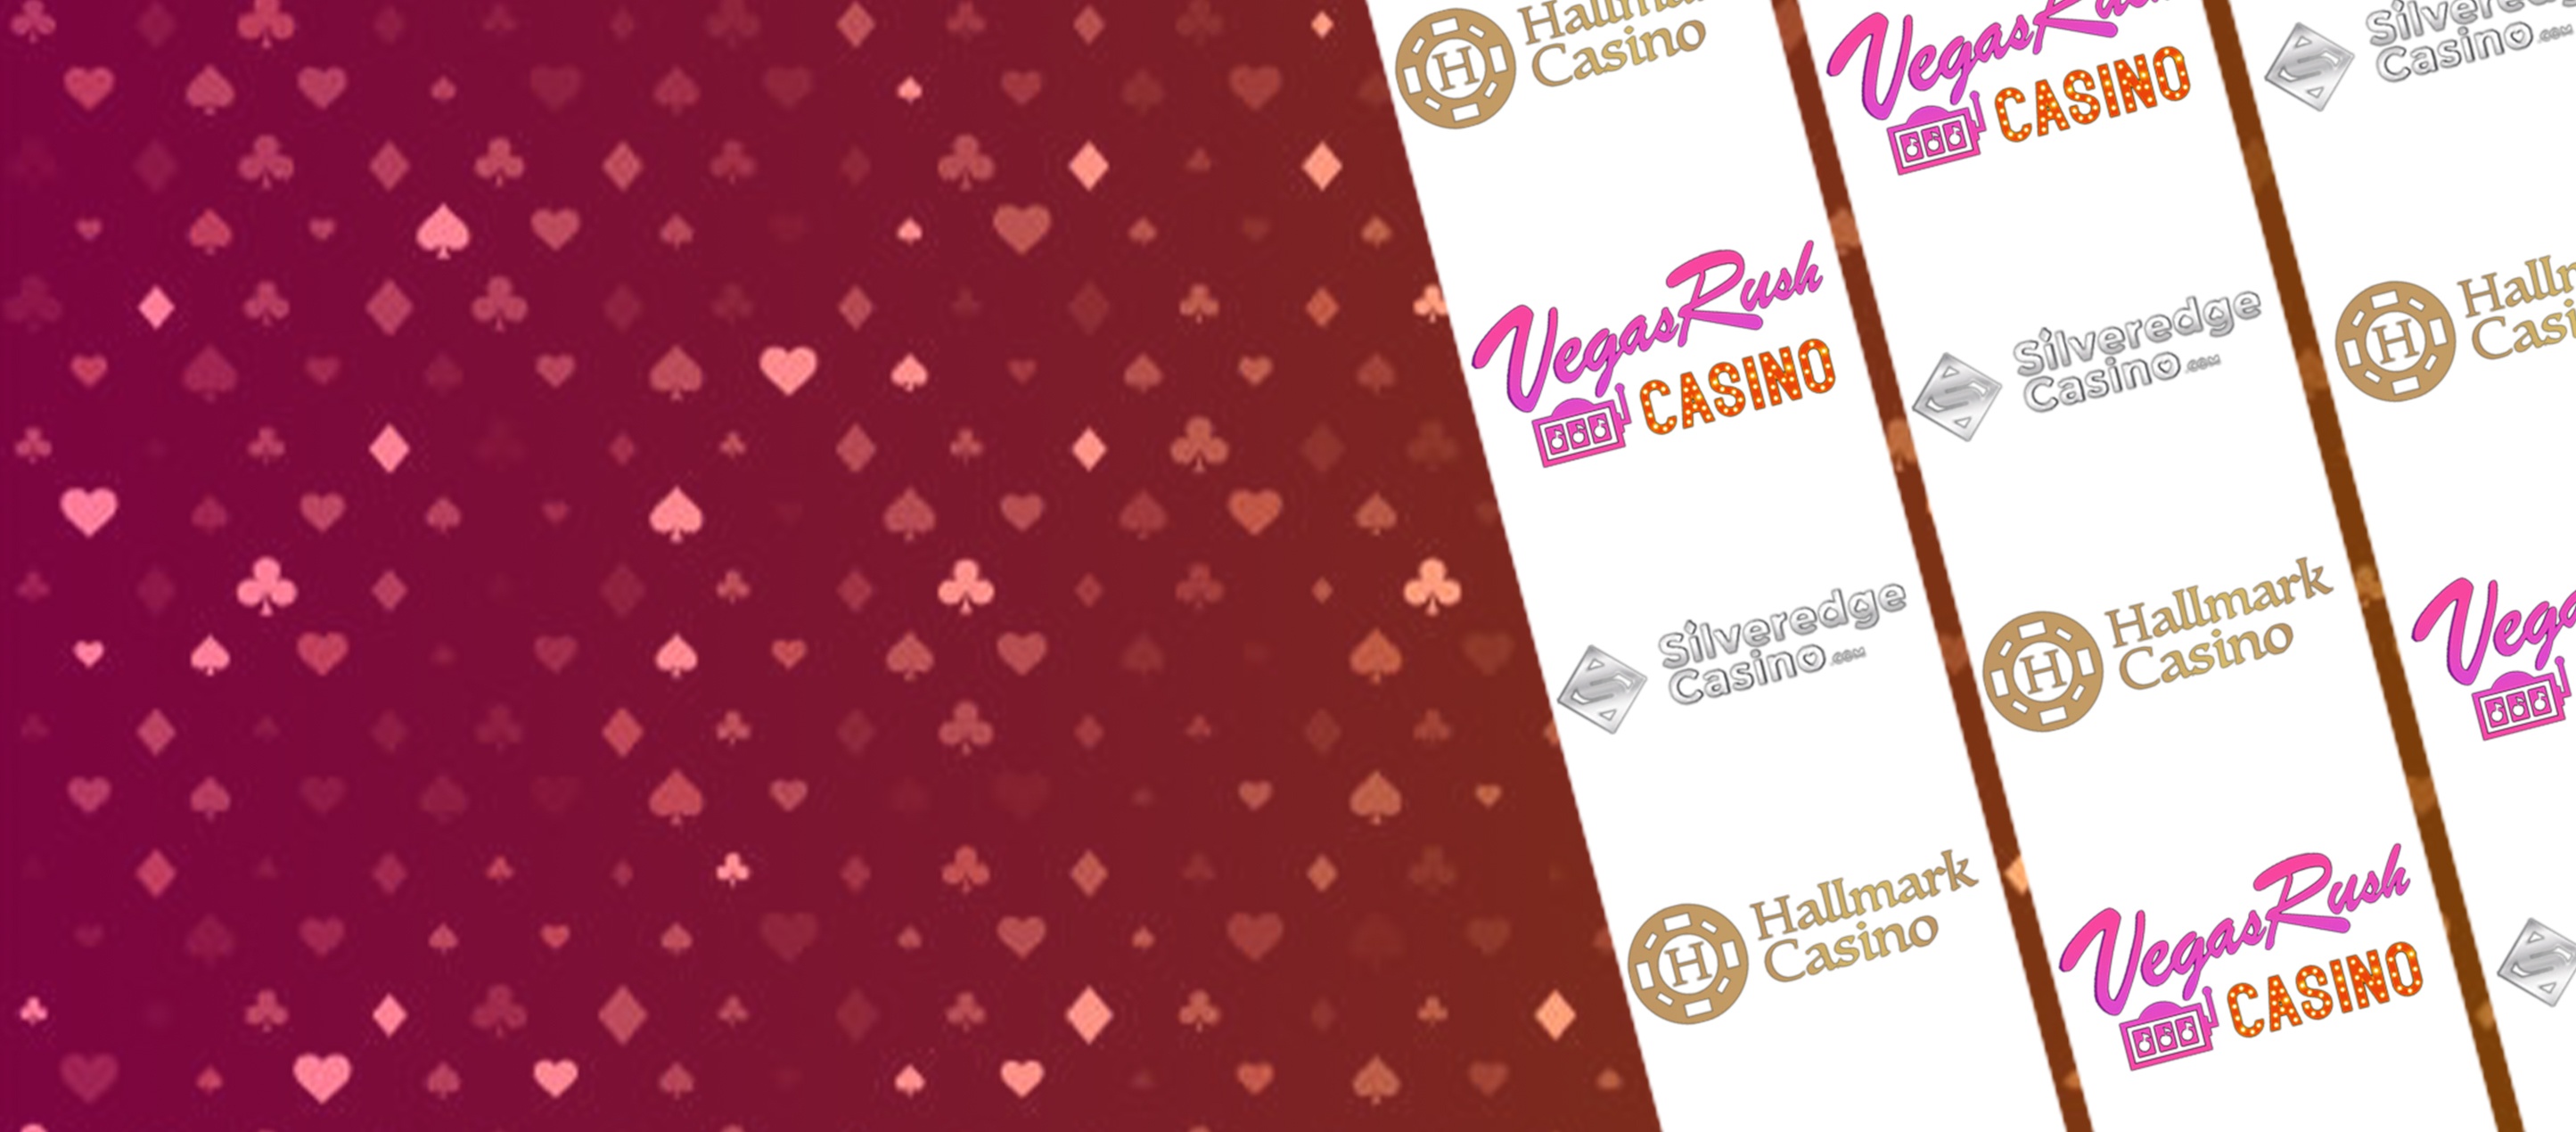 hallmark casino no deposit bonus january 2020